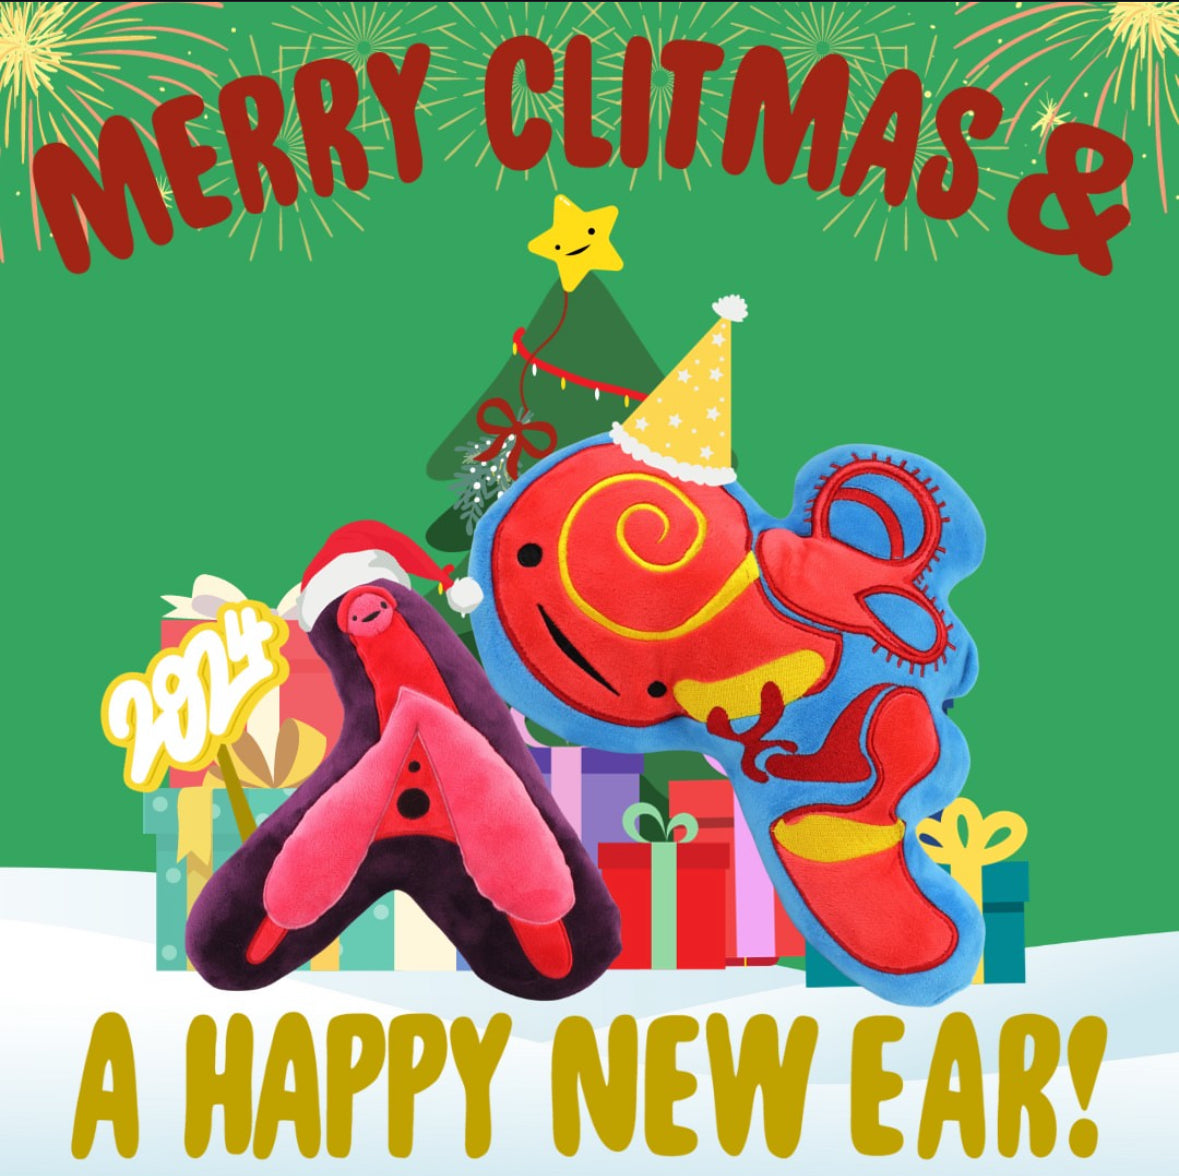 e-Cadeaubon "Merry Clitmas & A Happy New Ear"